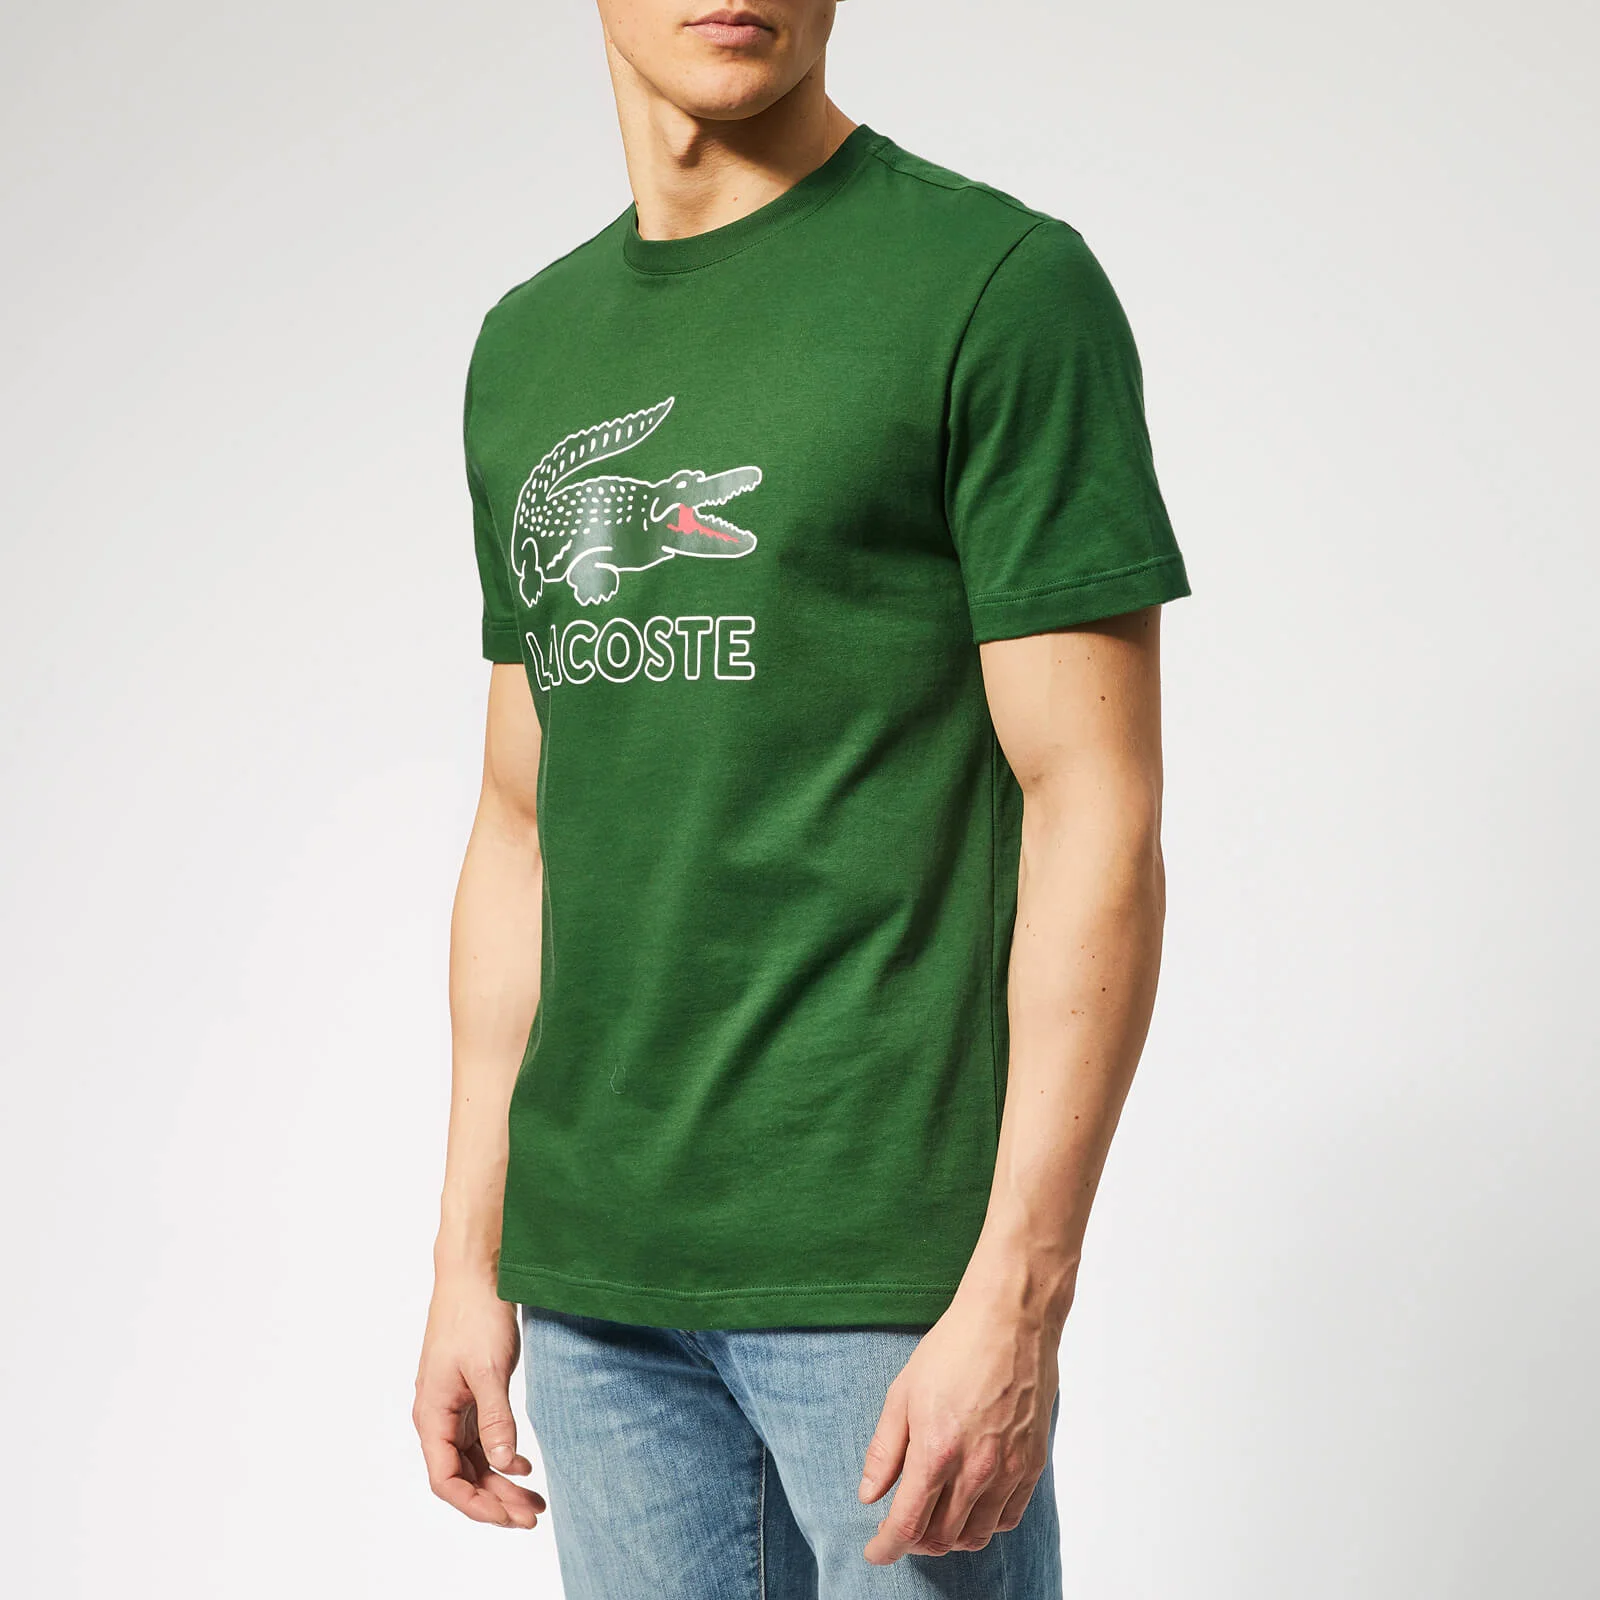 Lacoste Men's Large Logo T-Shirt - Green Image 1